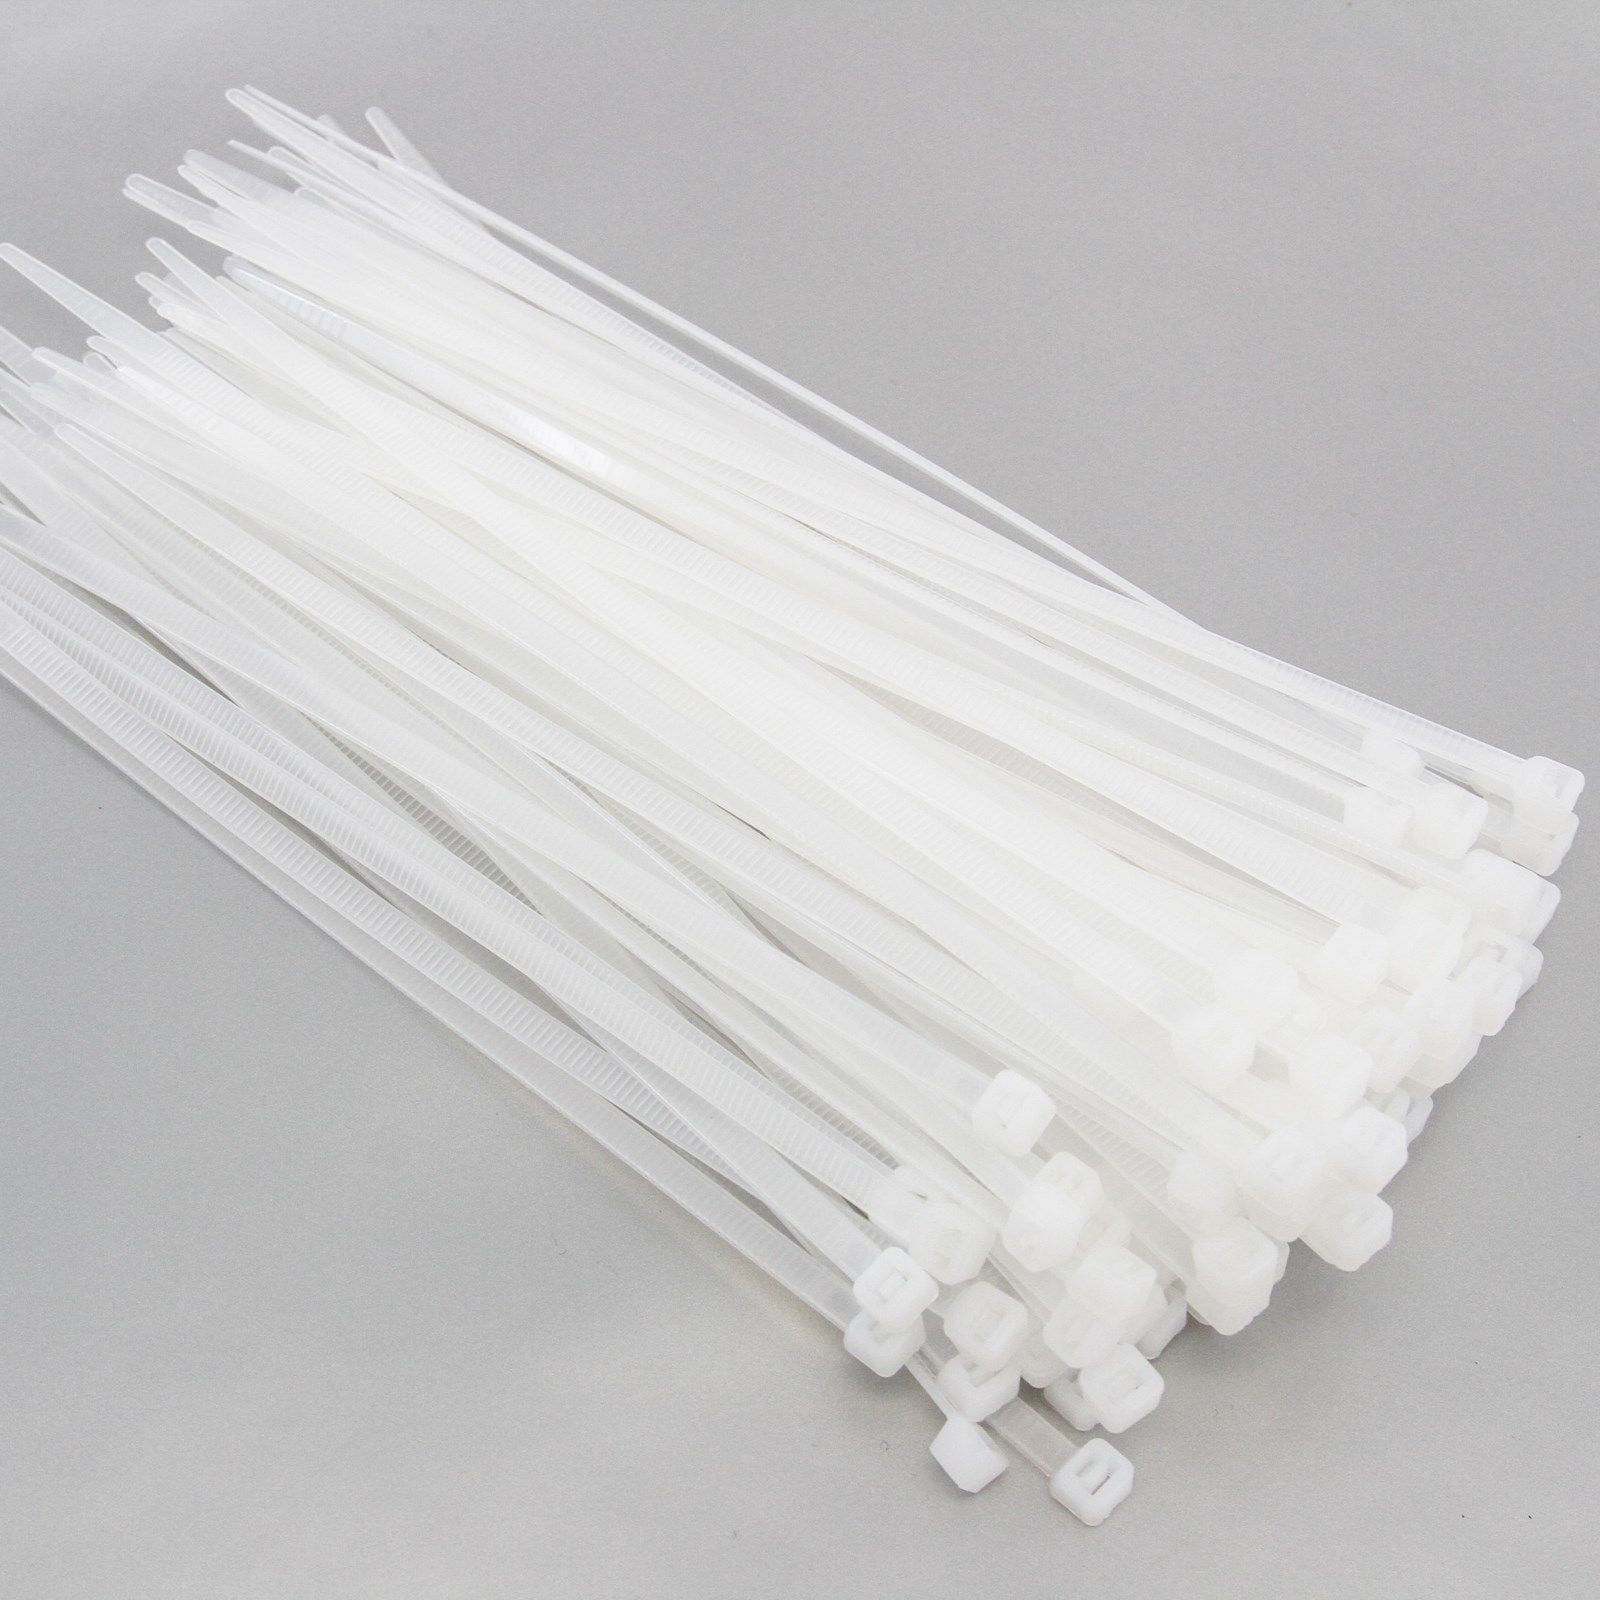 NiftyPlaza 8 Inch Mount Cable Ties 50 lbs Nylon Wrap Zip Ties Durable 500 White 